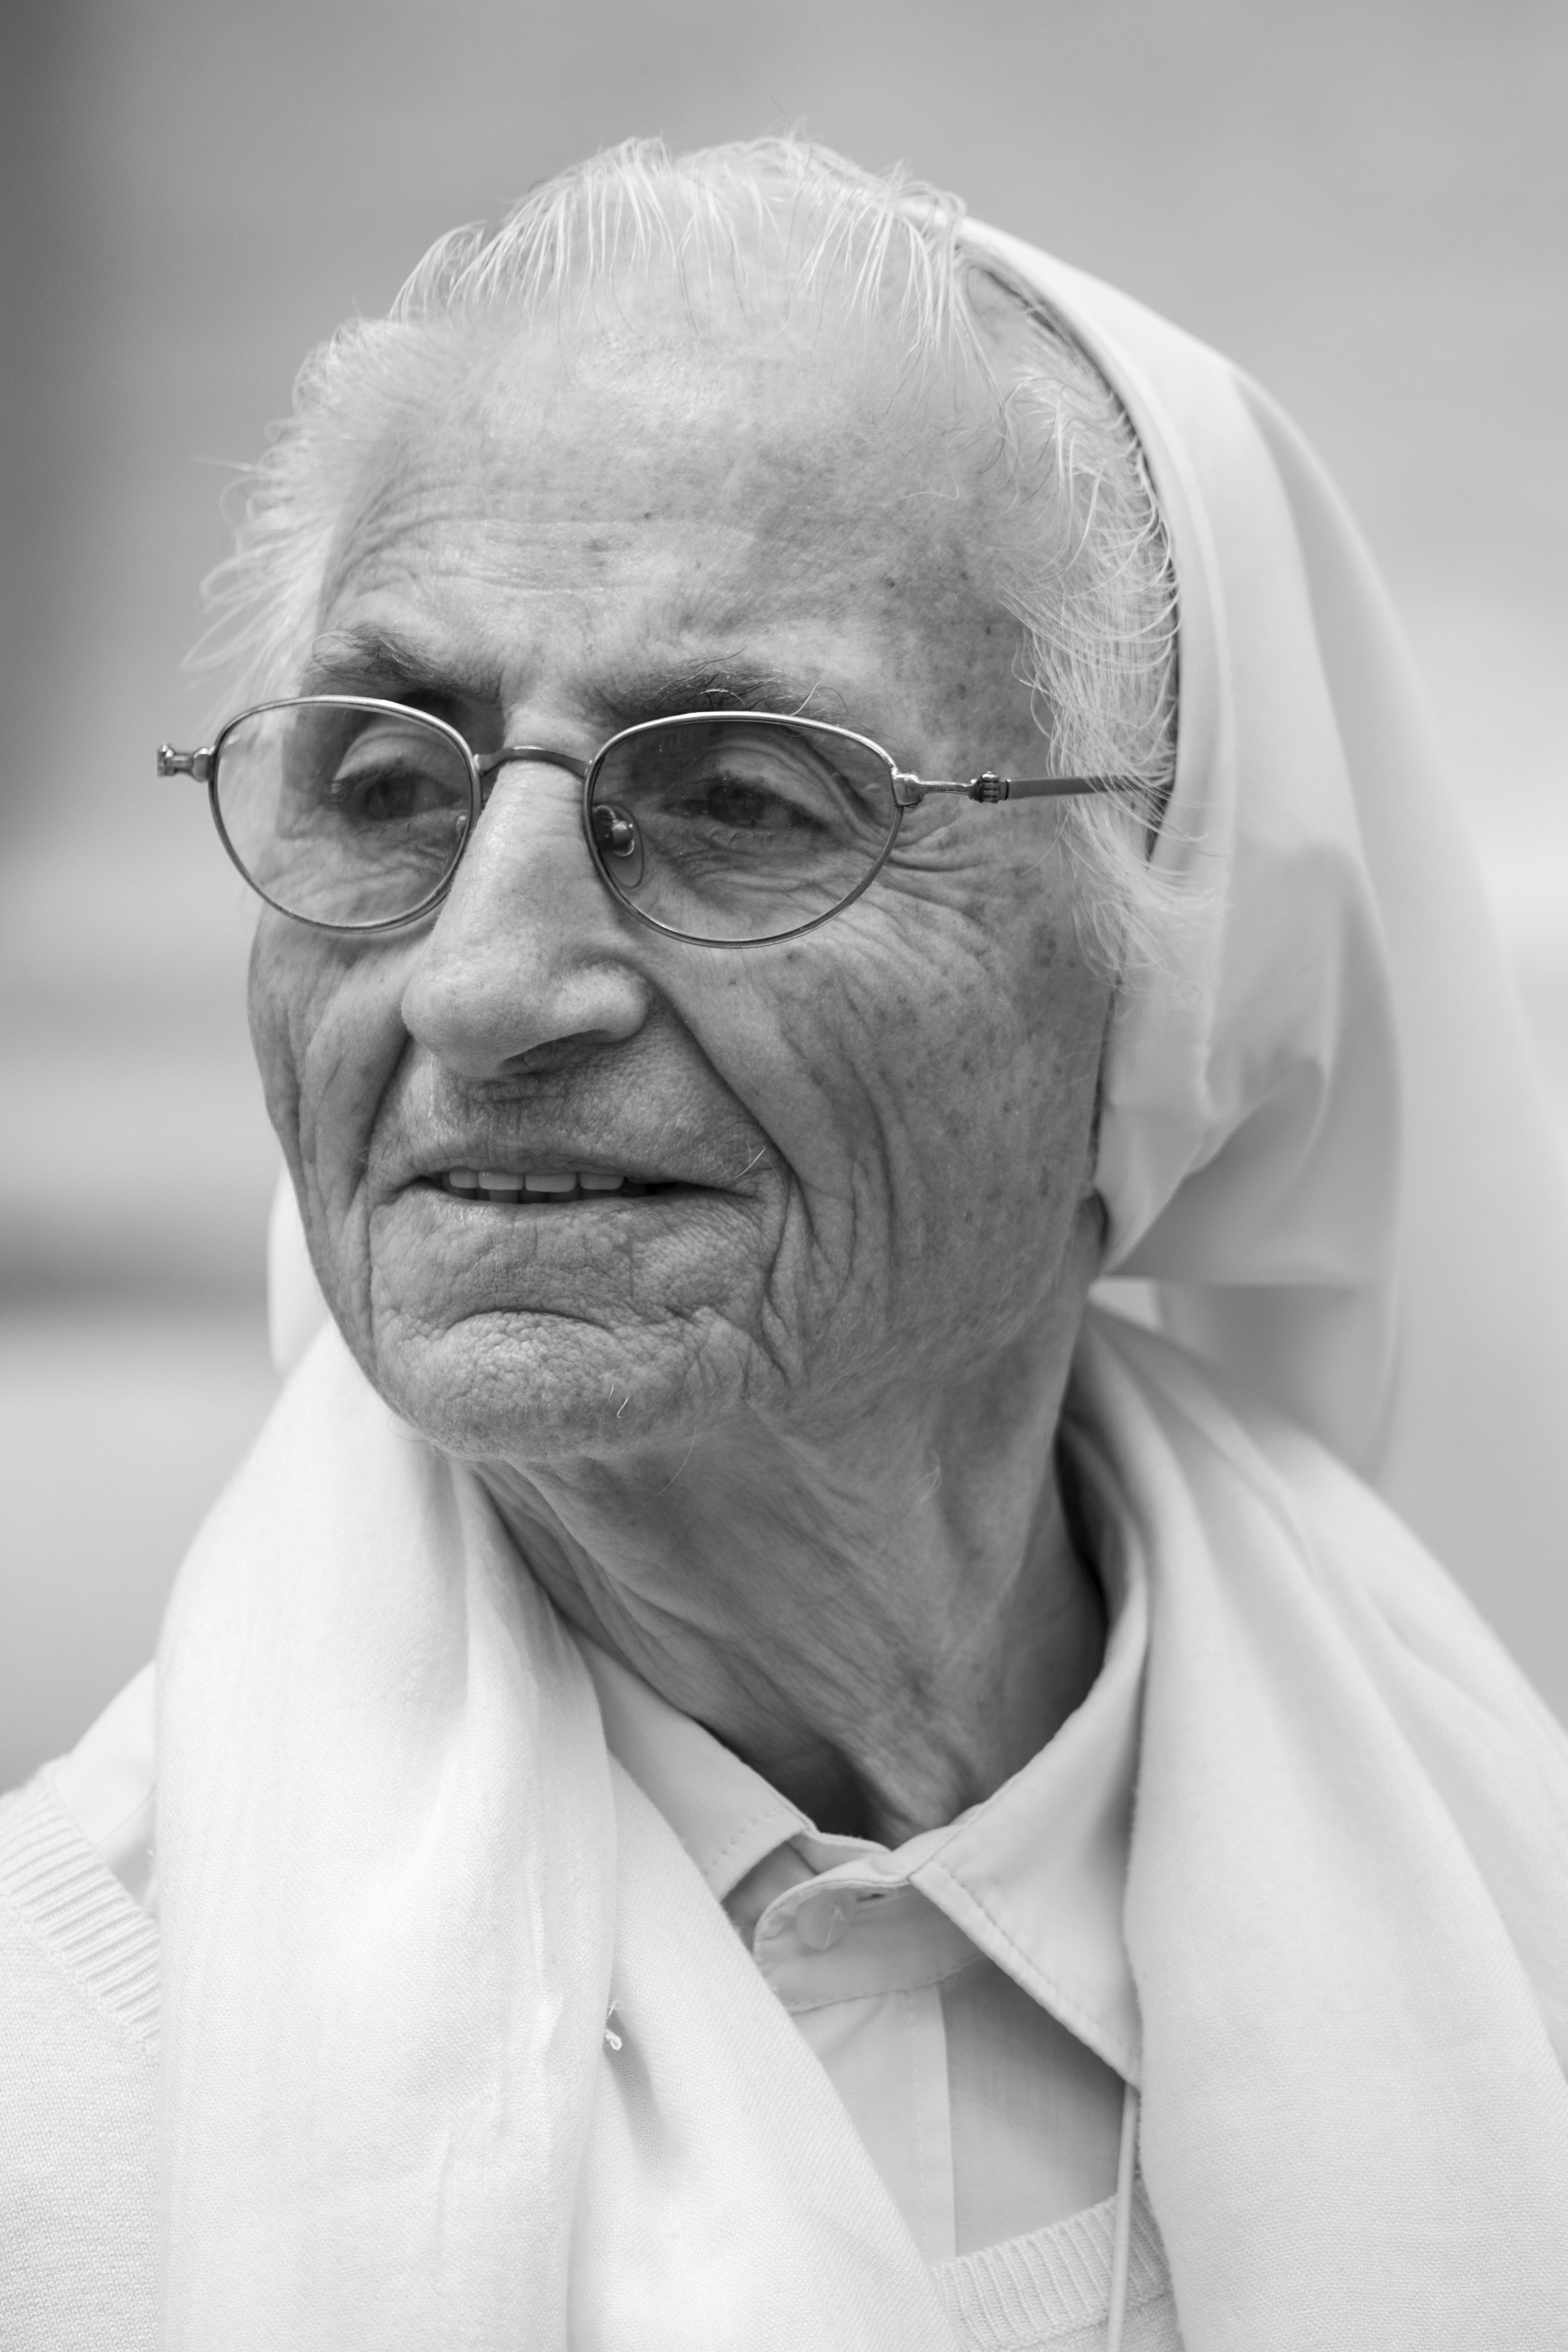 Sister Julie recognized Thelma | Photo: Unsplash